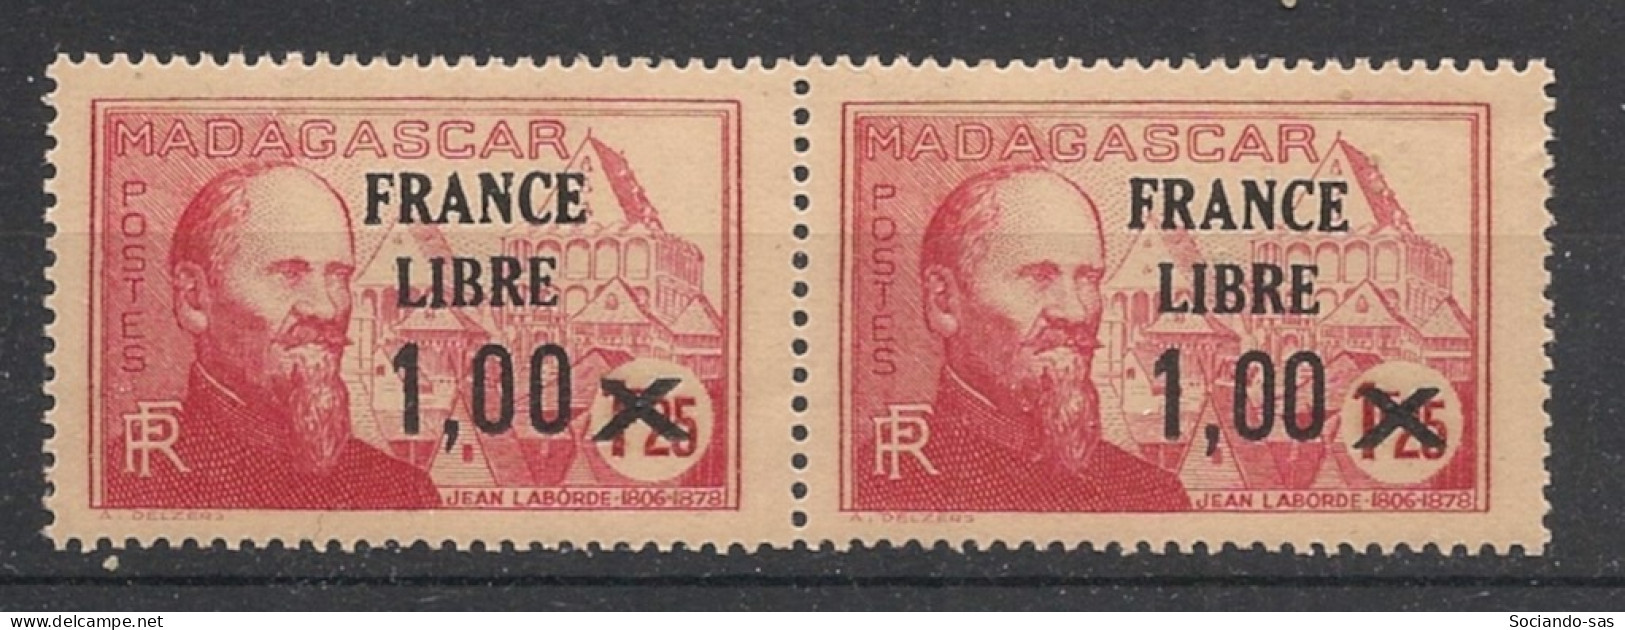 MADAGASCAR - 1942 - N°YT. 260b - France Libre 1,00 Sur 1f25 - VARIETE Surcharge Espacée T.a.n. - Neuf Luxe ** / MNH - Nuovi